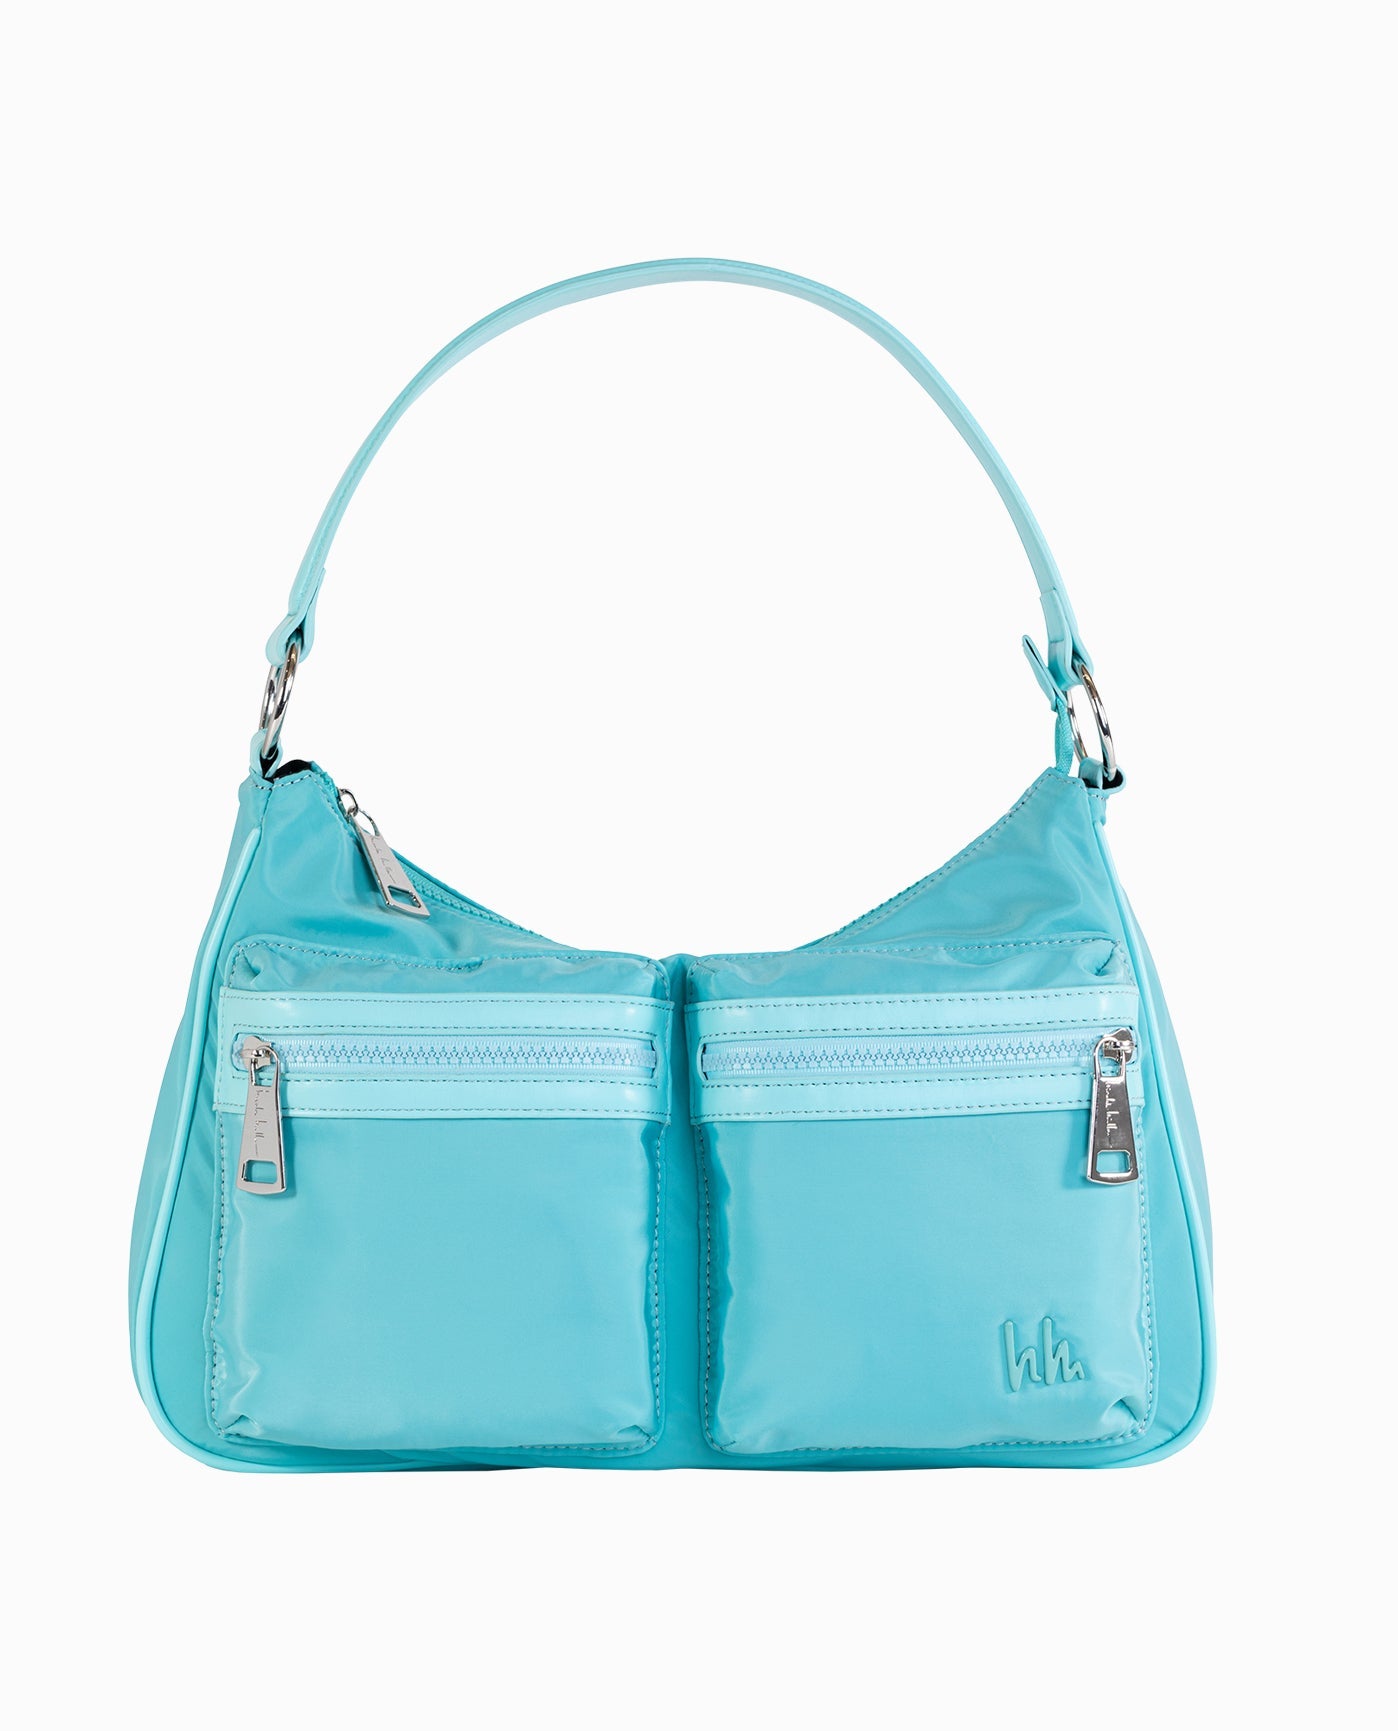 Nicole Miller bag purse blue | Purses and bags, Nicole miller, Purses